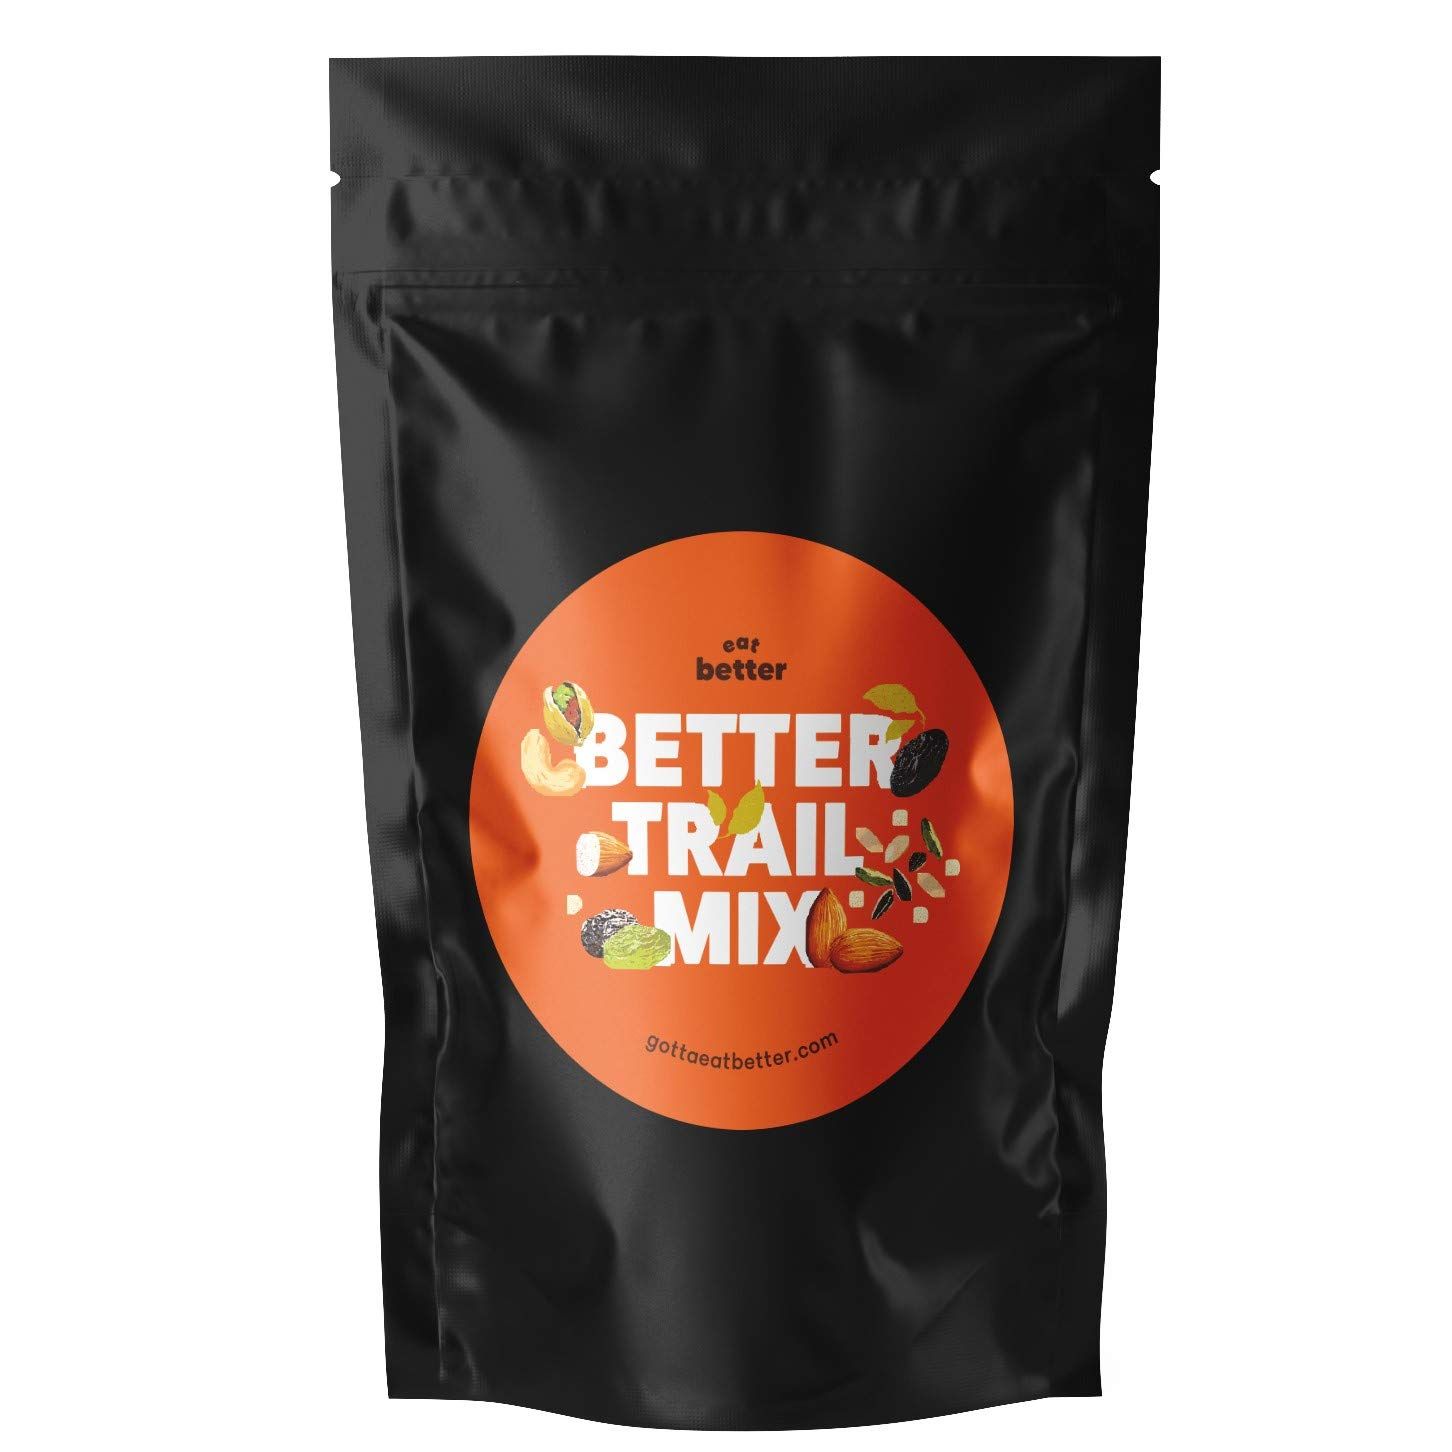 Eat Better Trail Mix Image